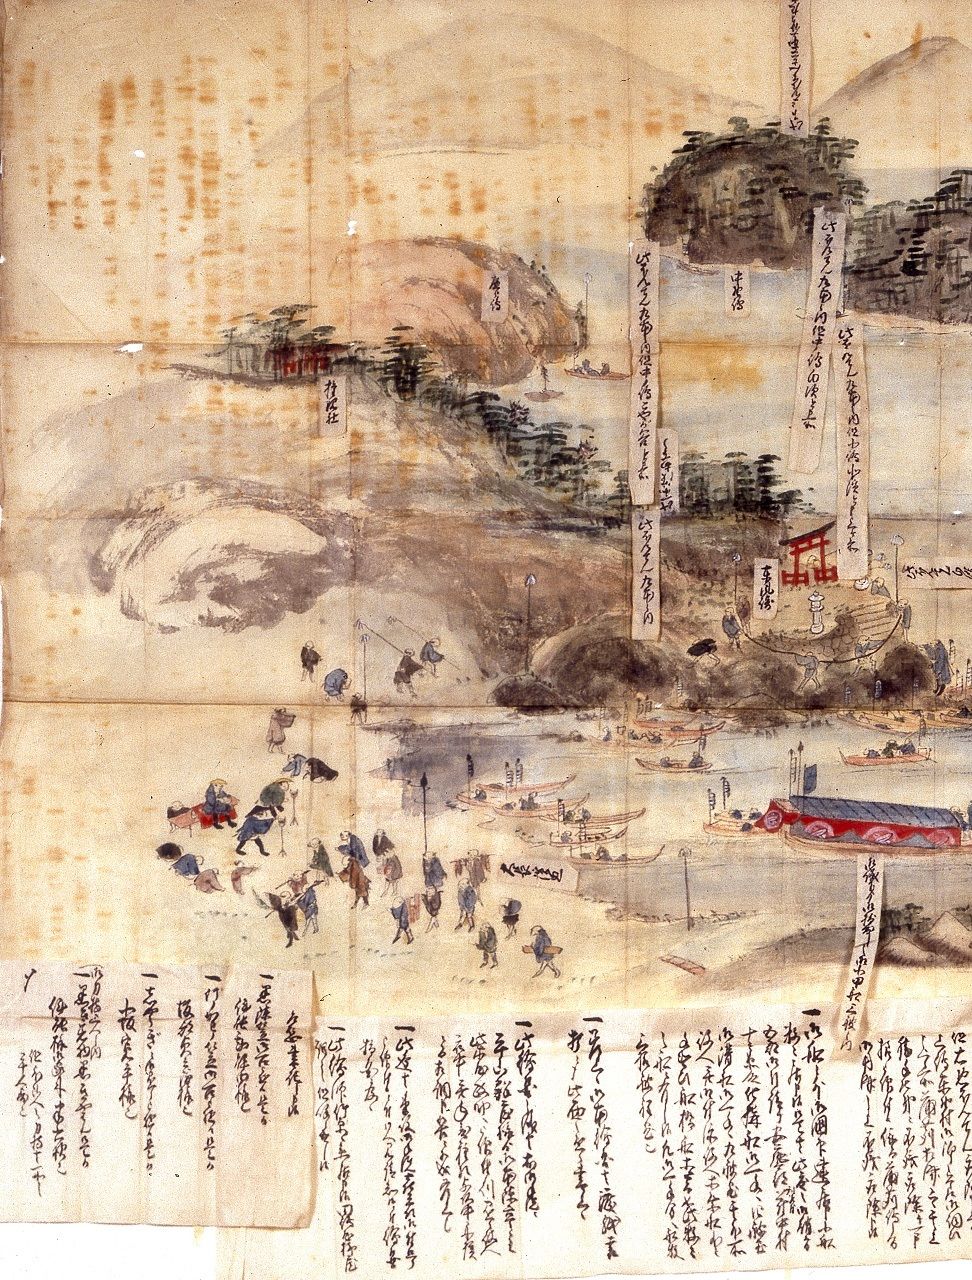 Inō and his band of surveyors in 1806 chart the port in Mitarai district on the island of Ōsaki Shimojima in present day Kure, Hiroshima Prefecture. (Courtesy of Kure City)